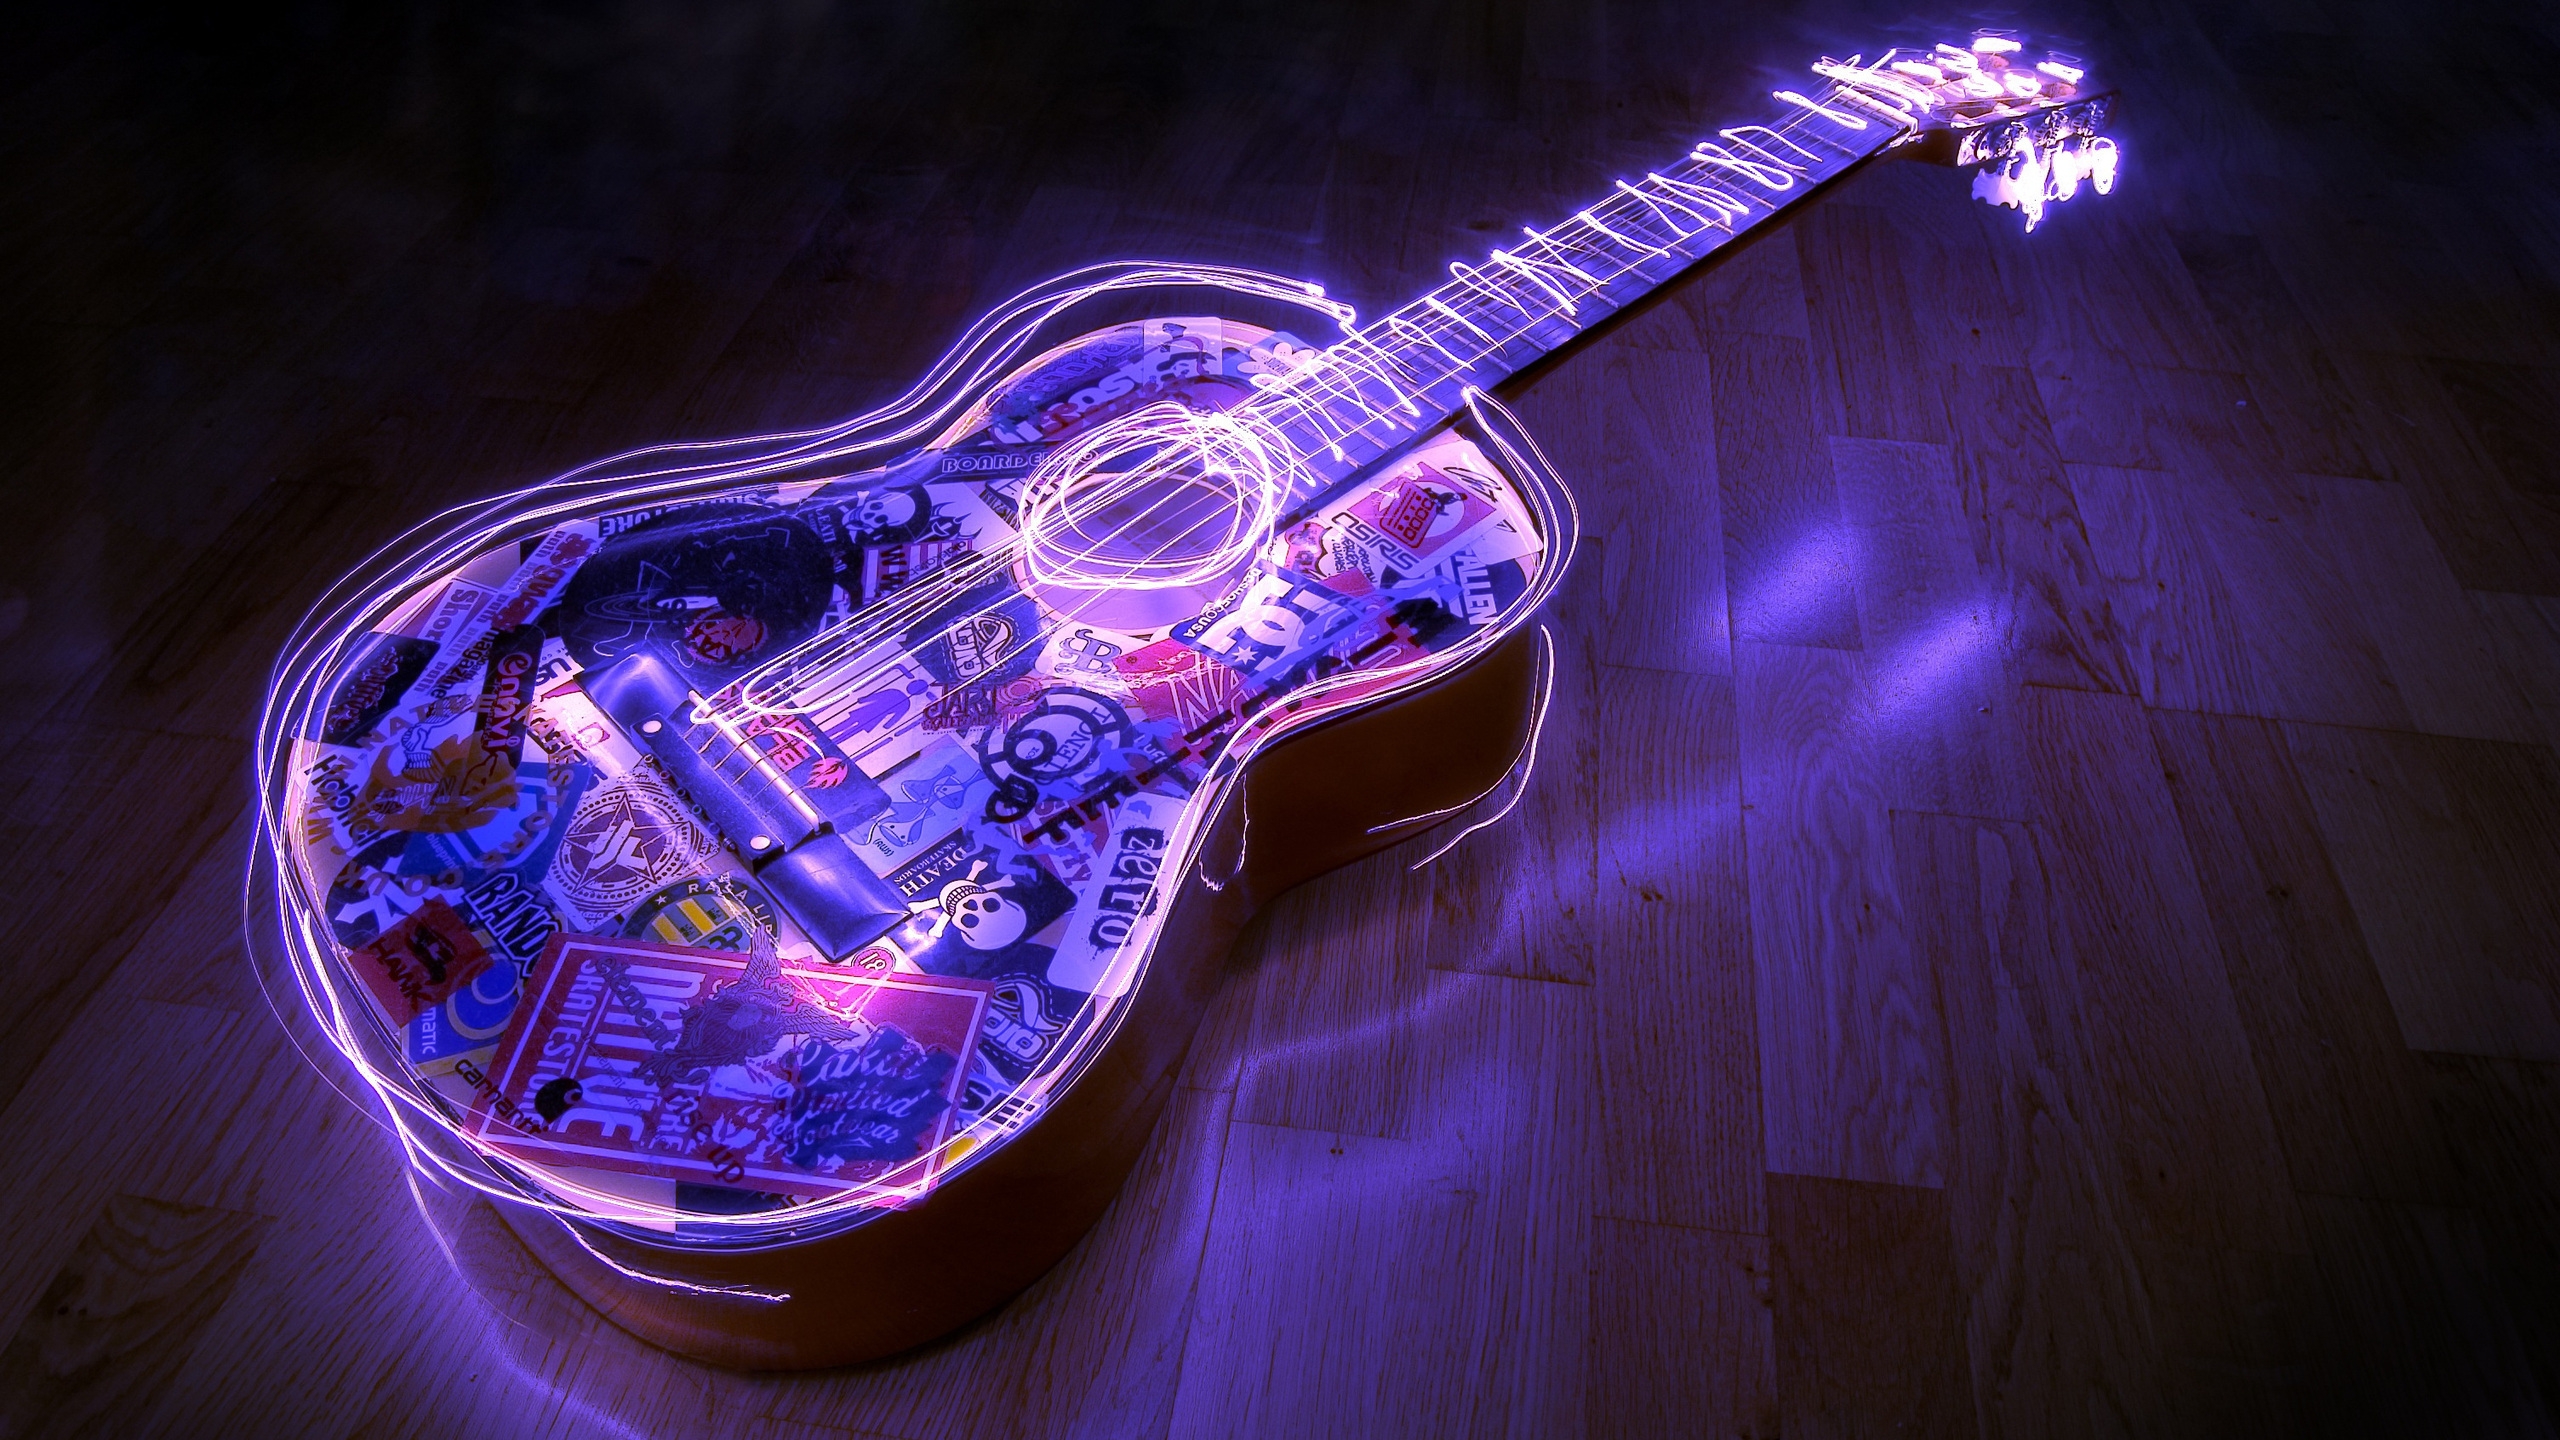 Lighted Guitar for 2560x1440 HDTV resolution